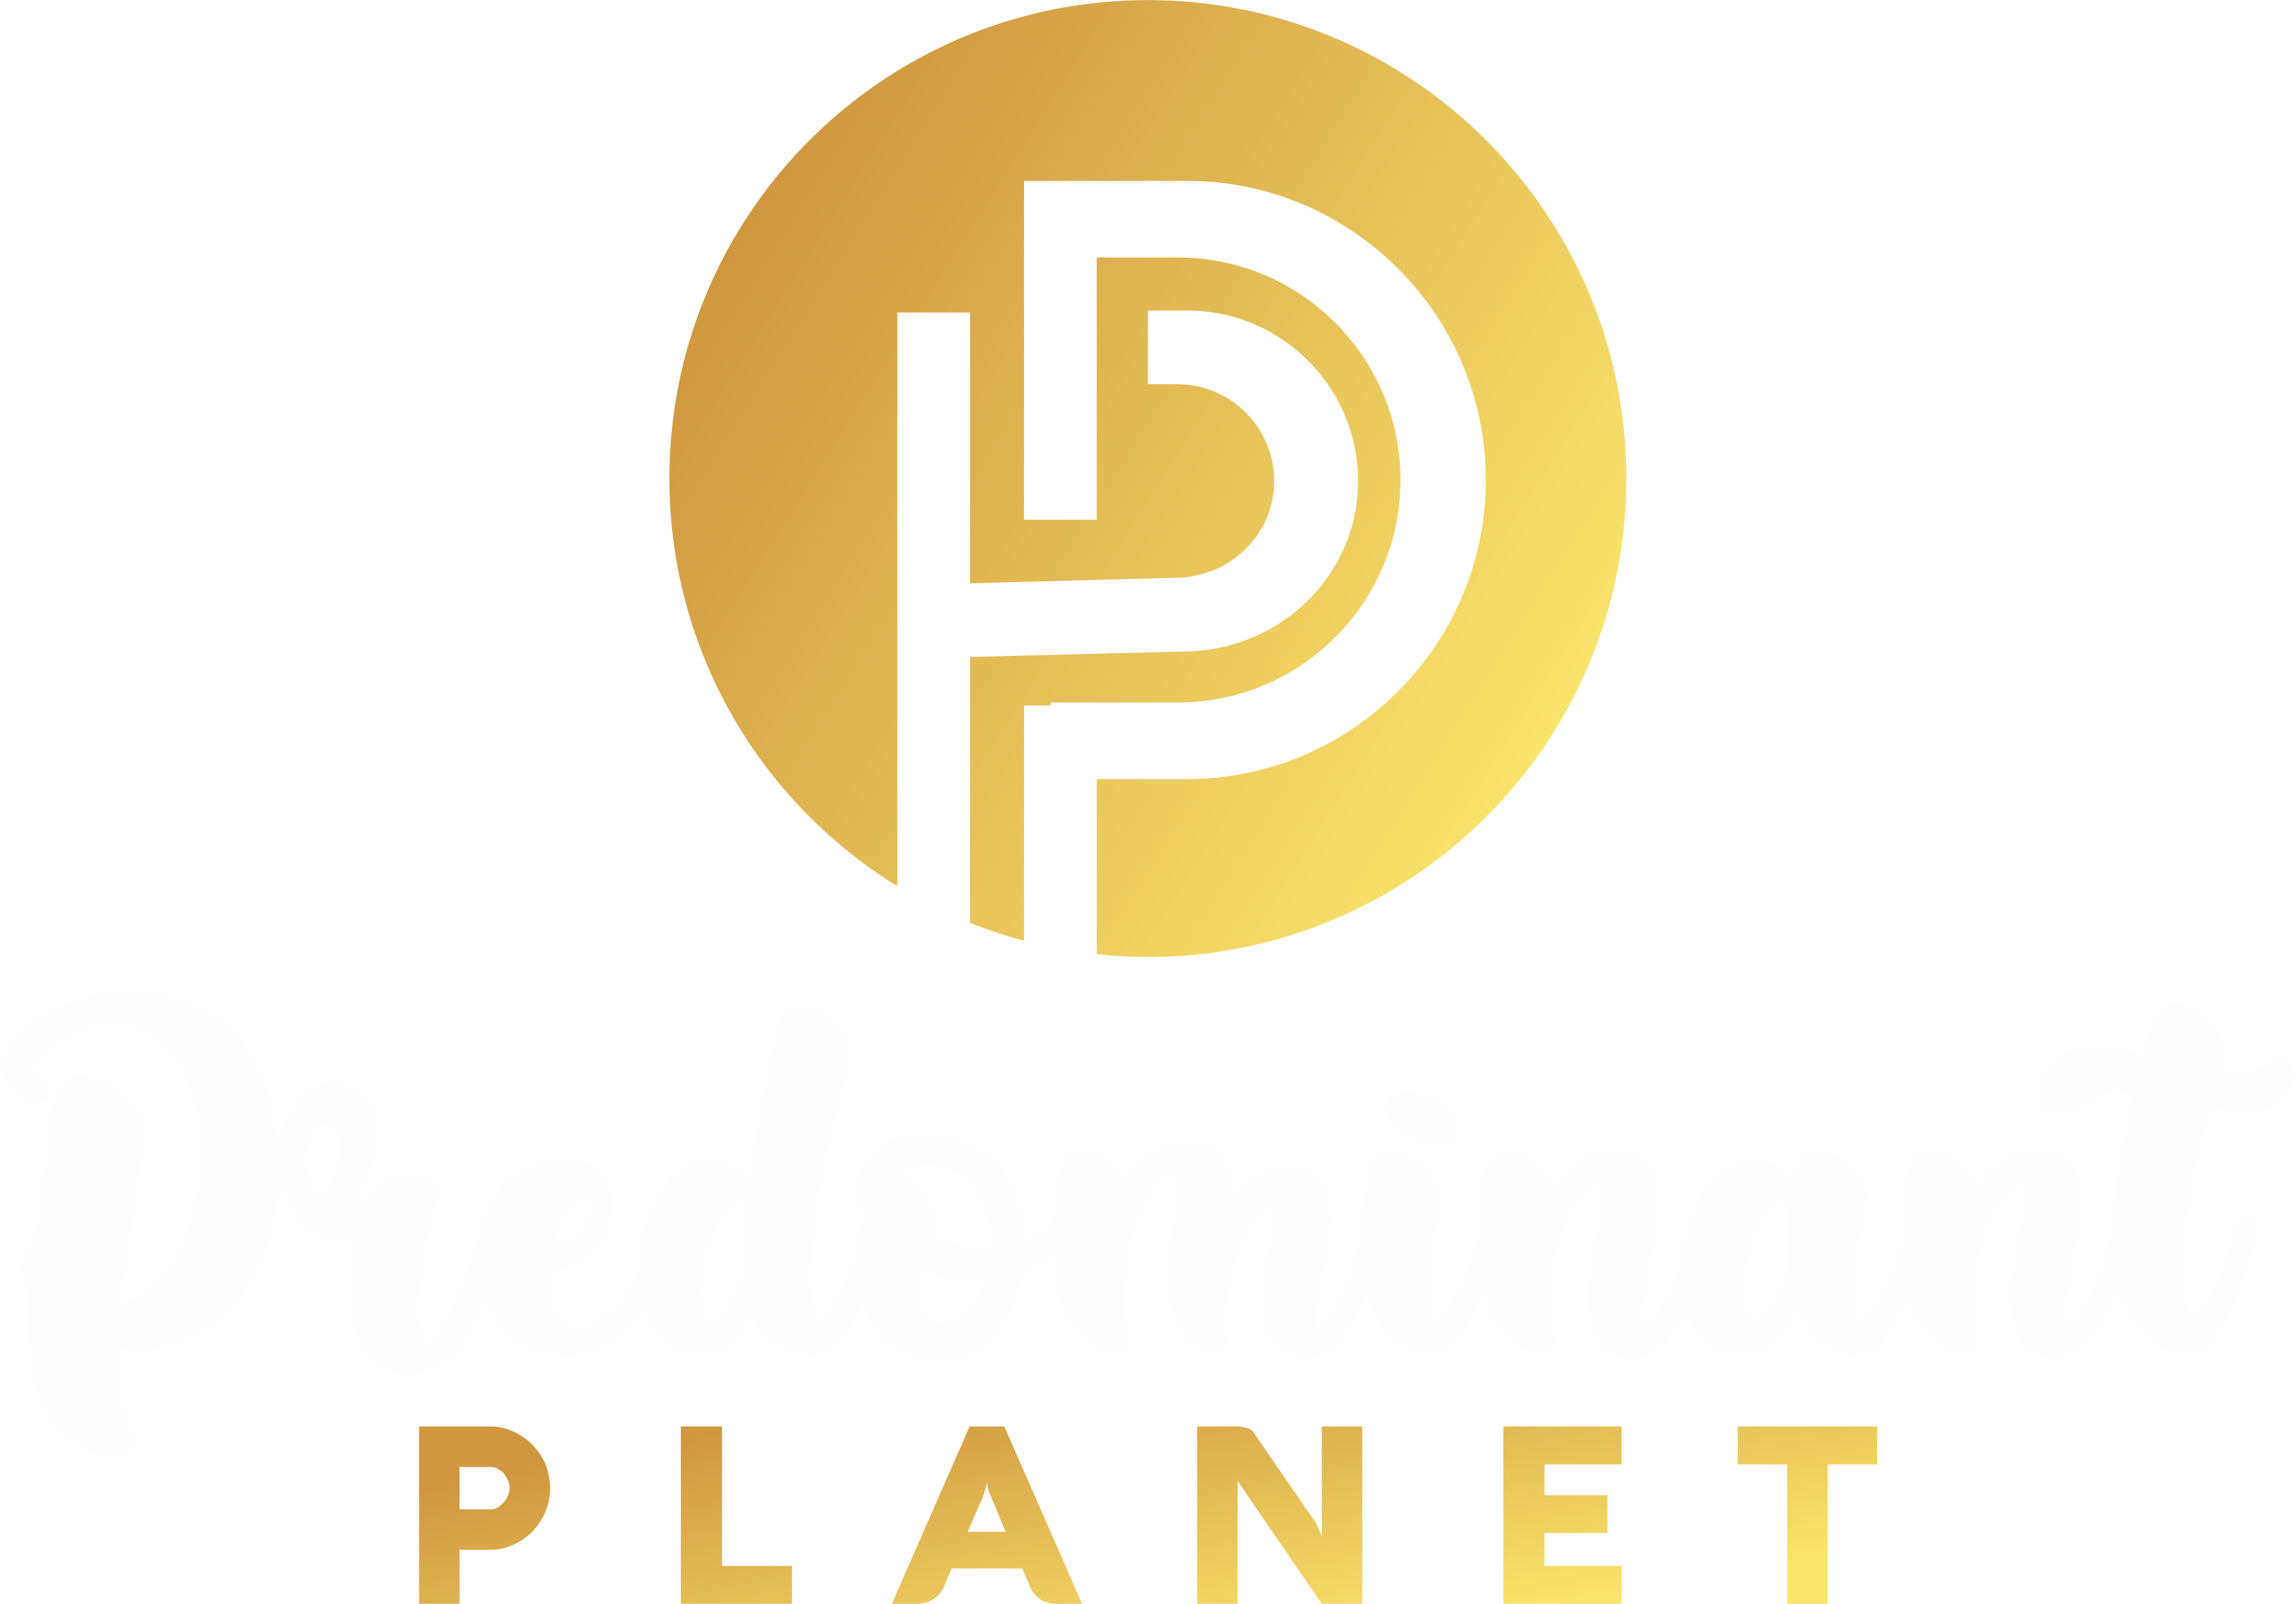 Predominant Planet logo